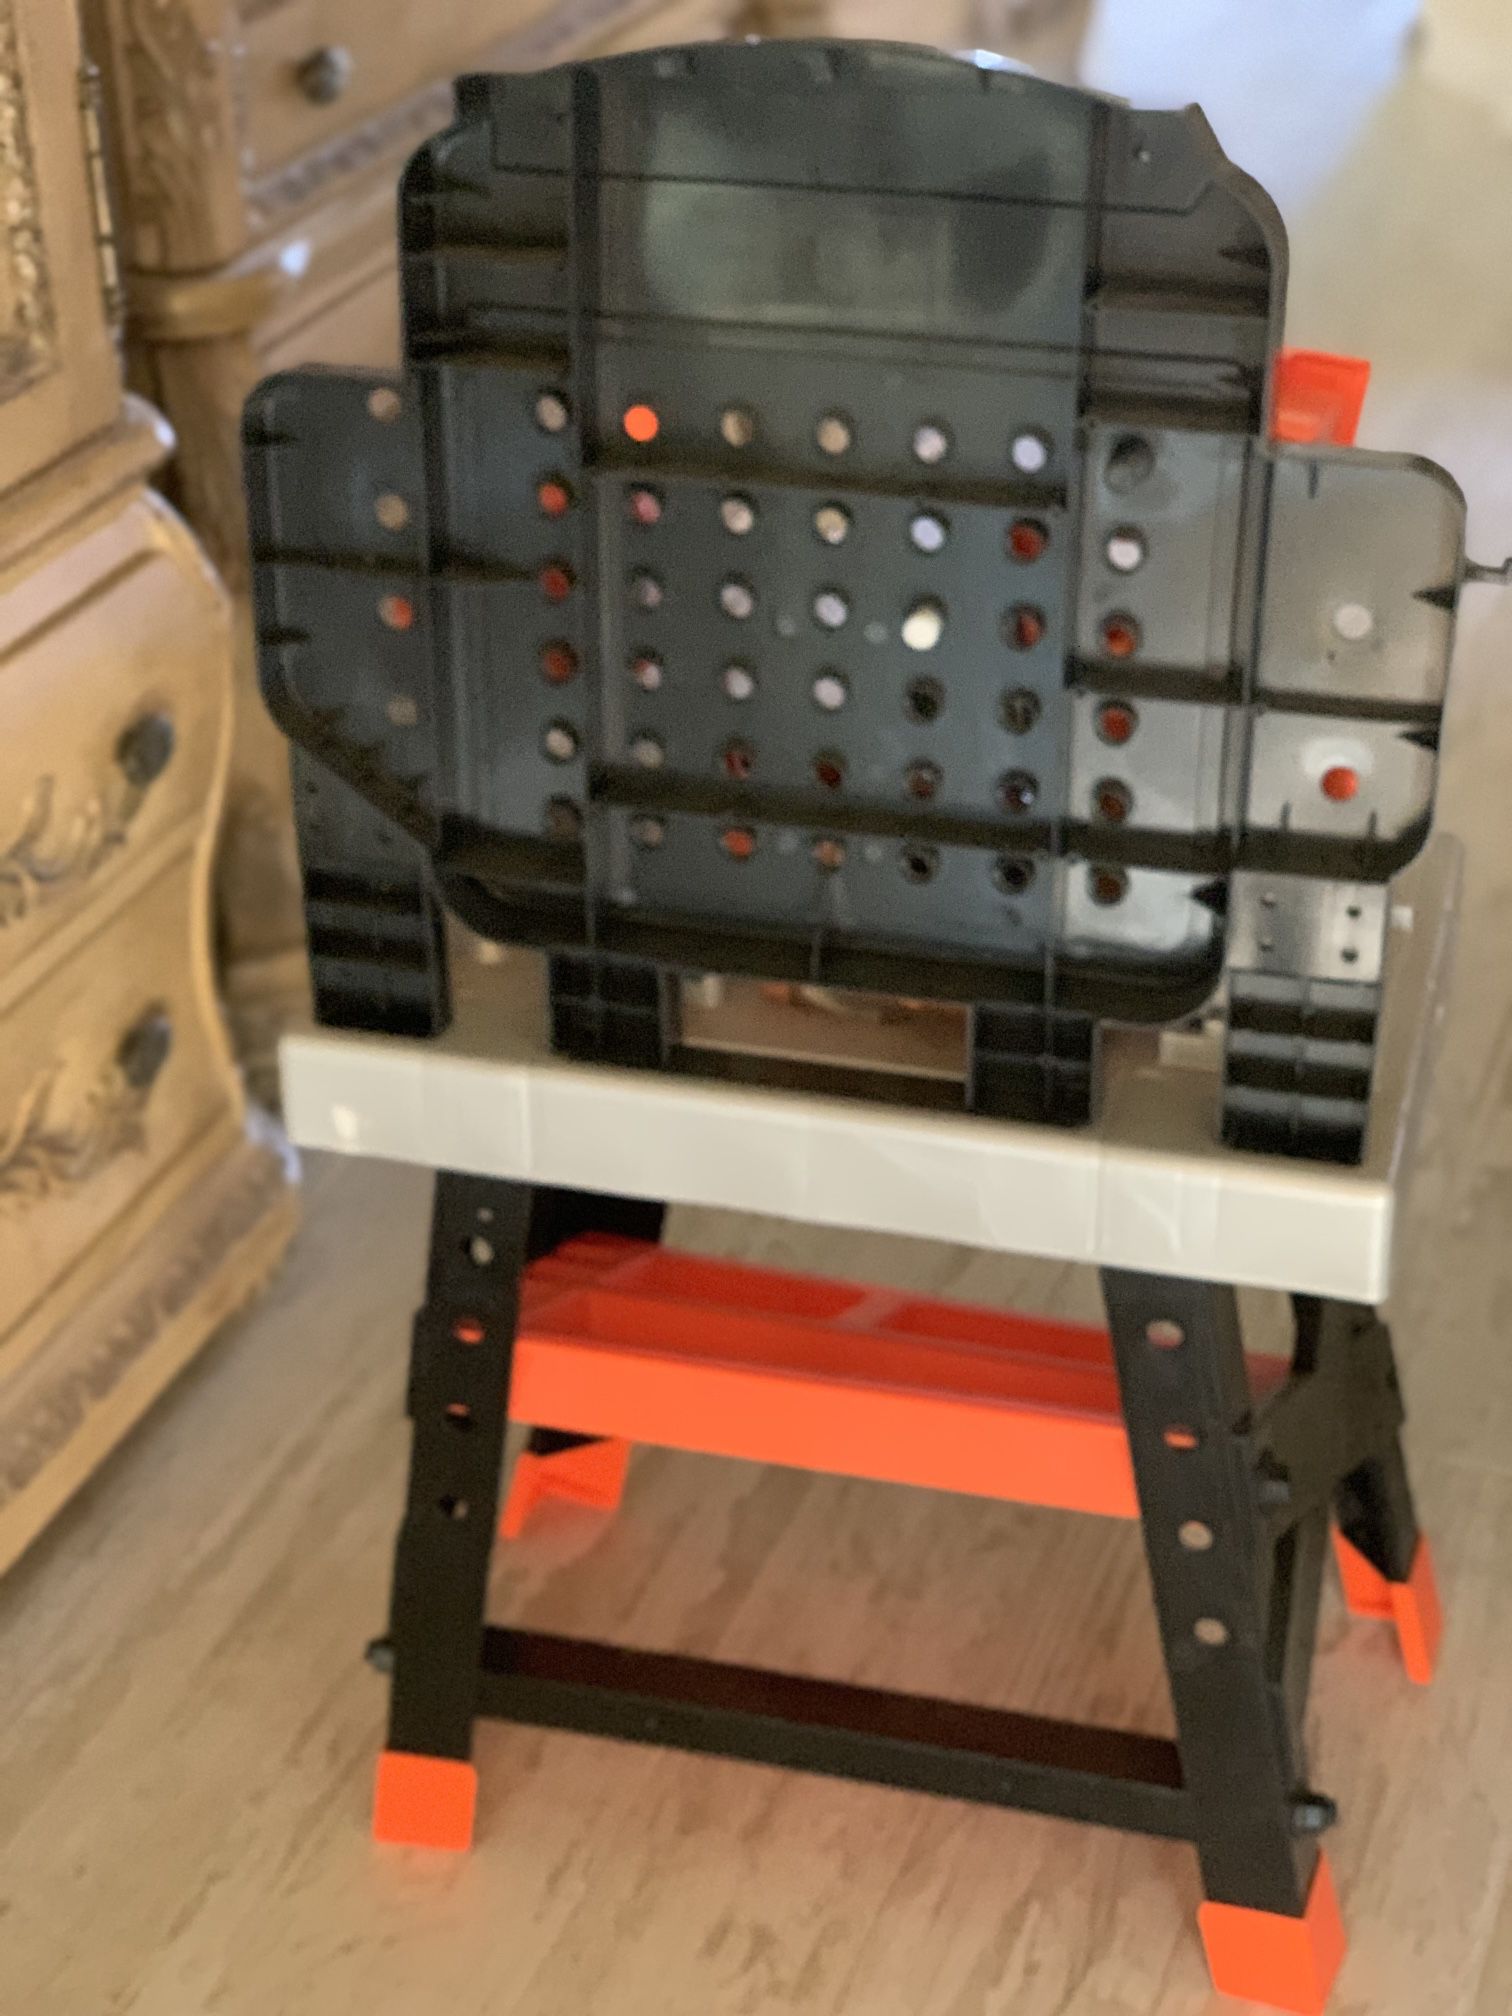 Black + Decker Toy Workbench for Sale in Fountain Valley, CA